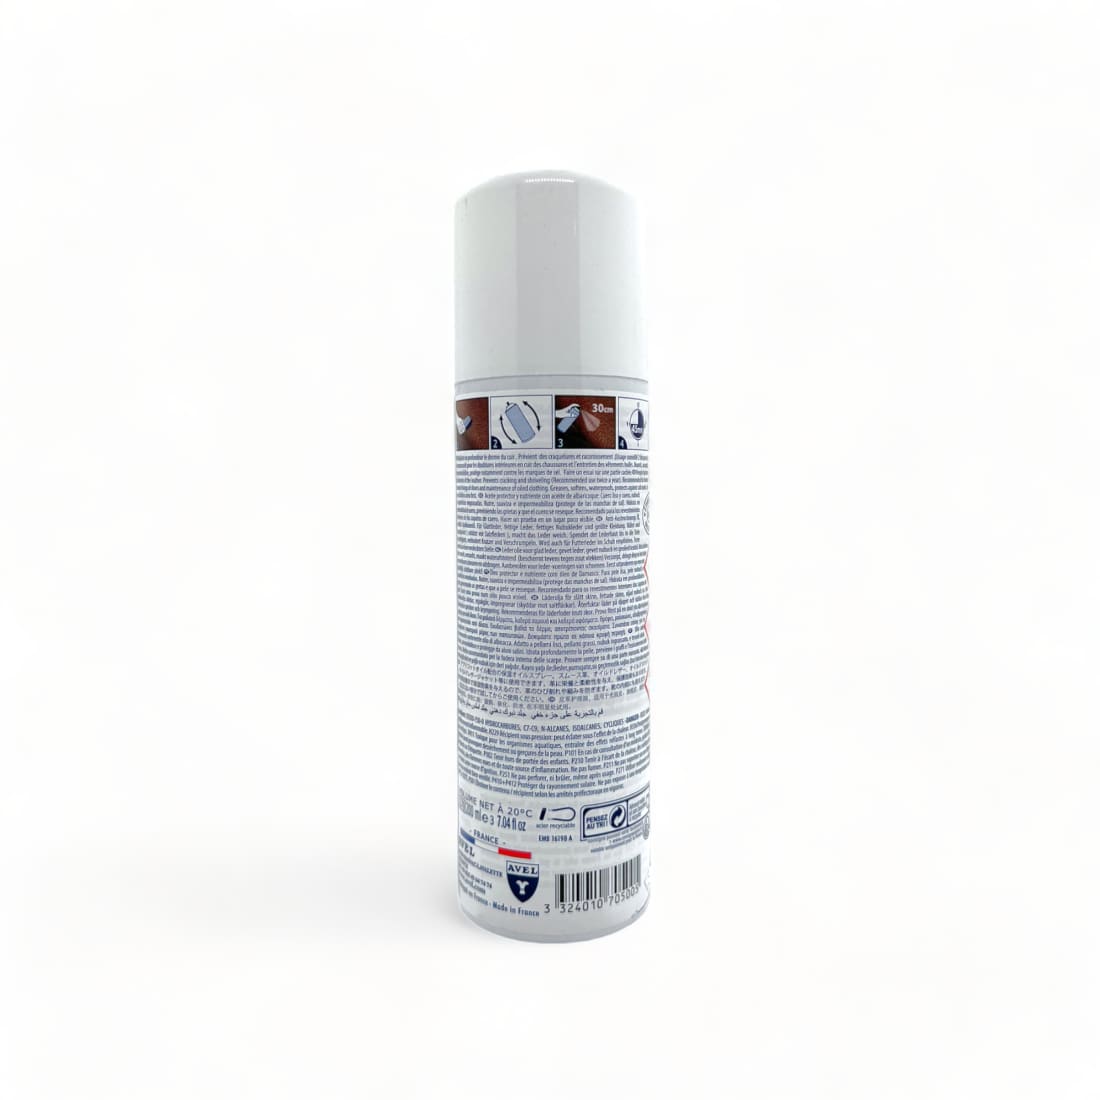 Spray Huile Protectrice et Nutritive - Saphir - 200 ml -